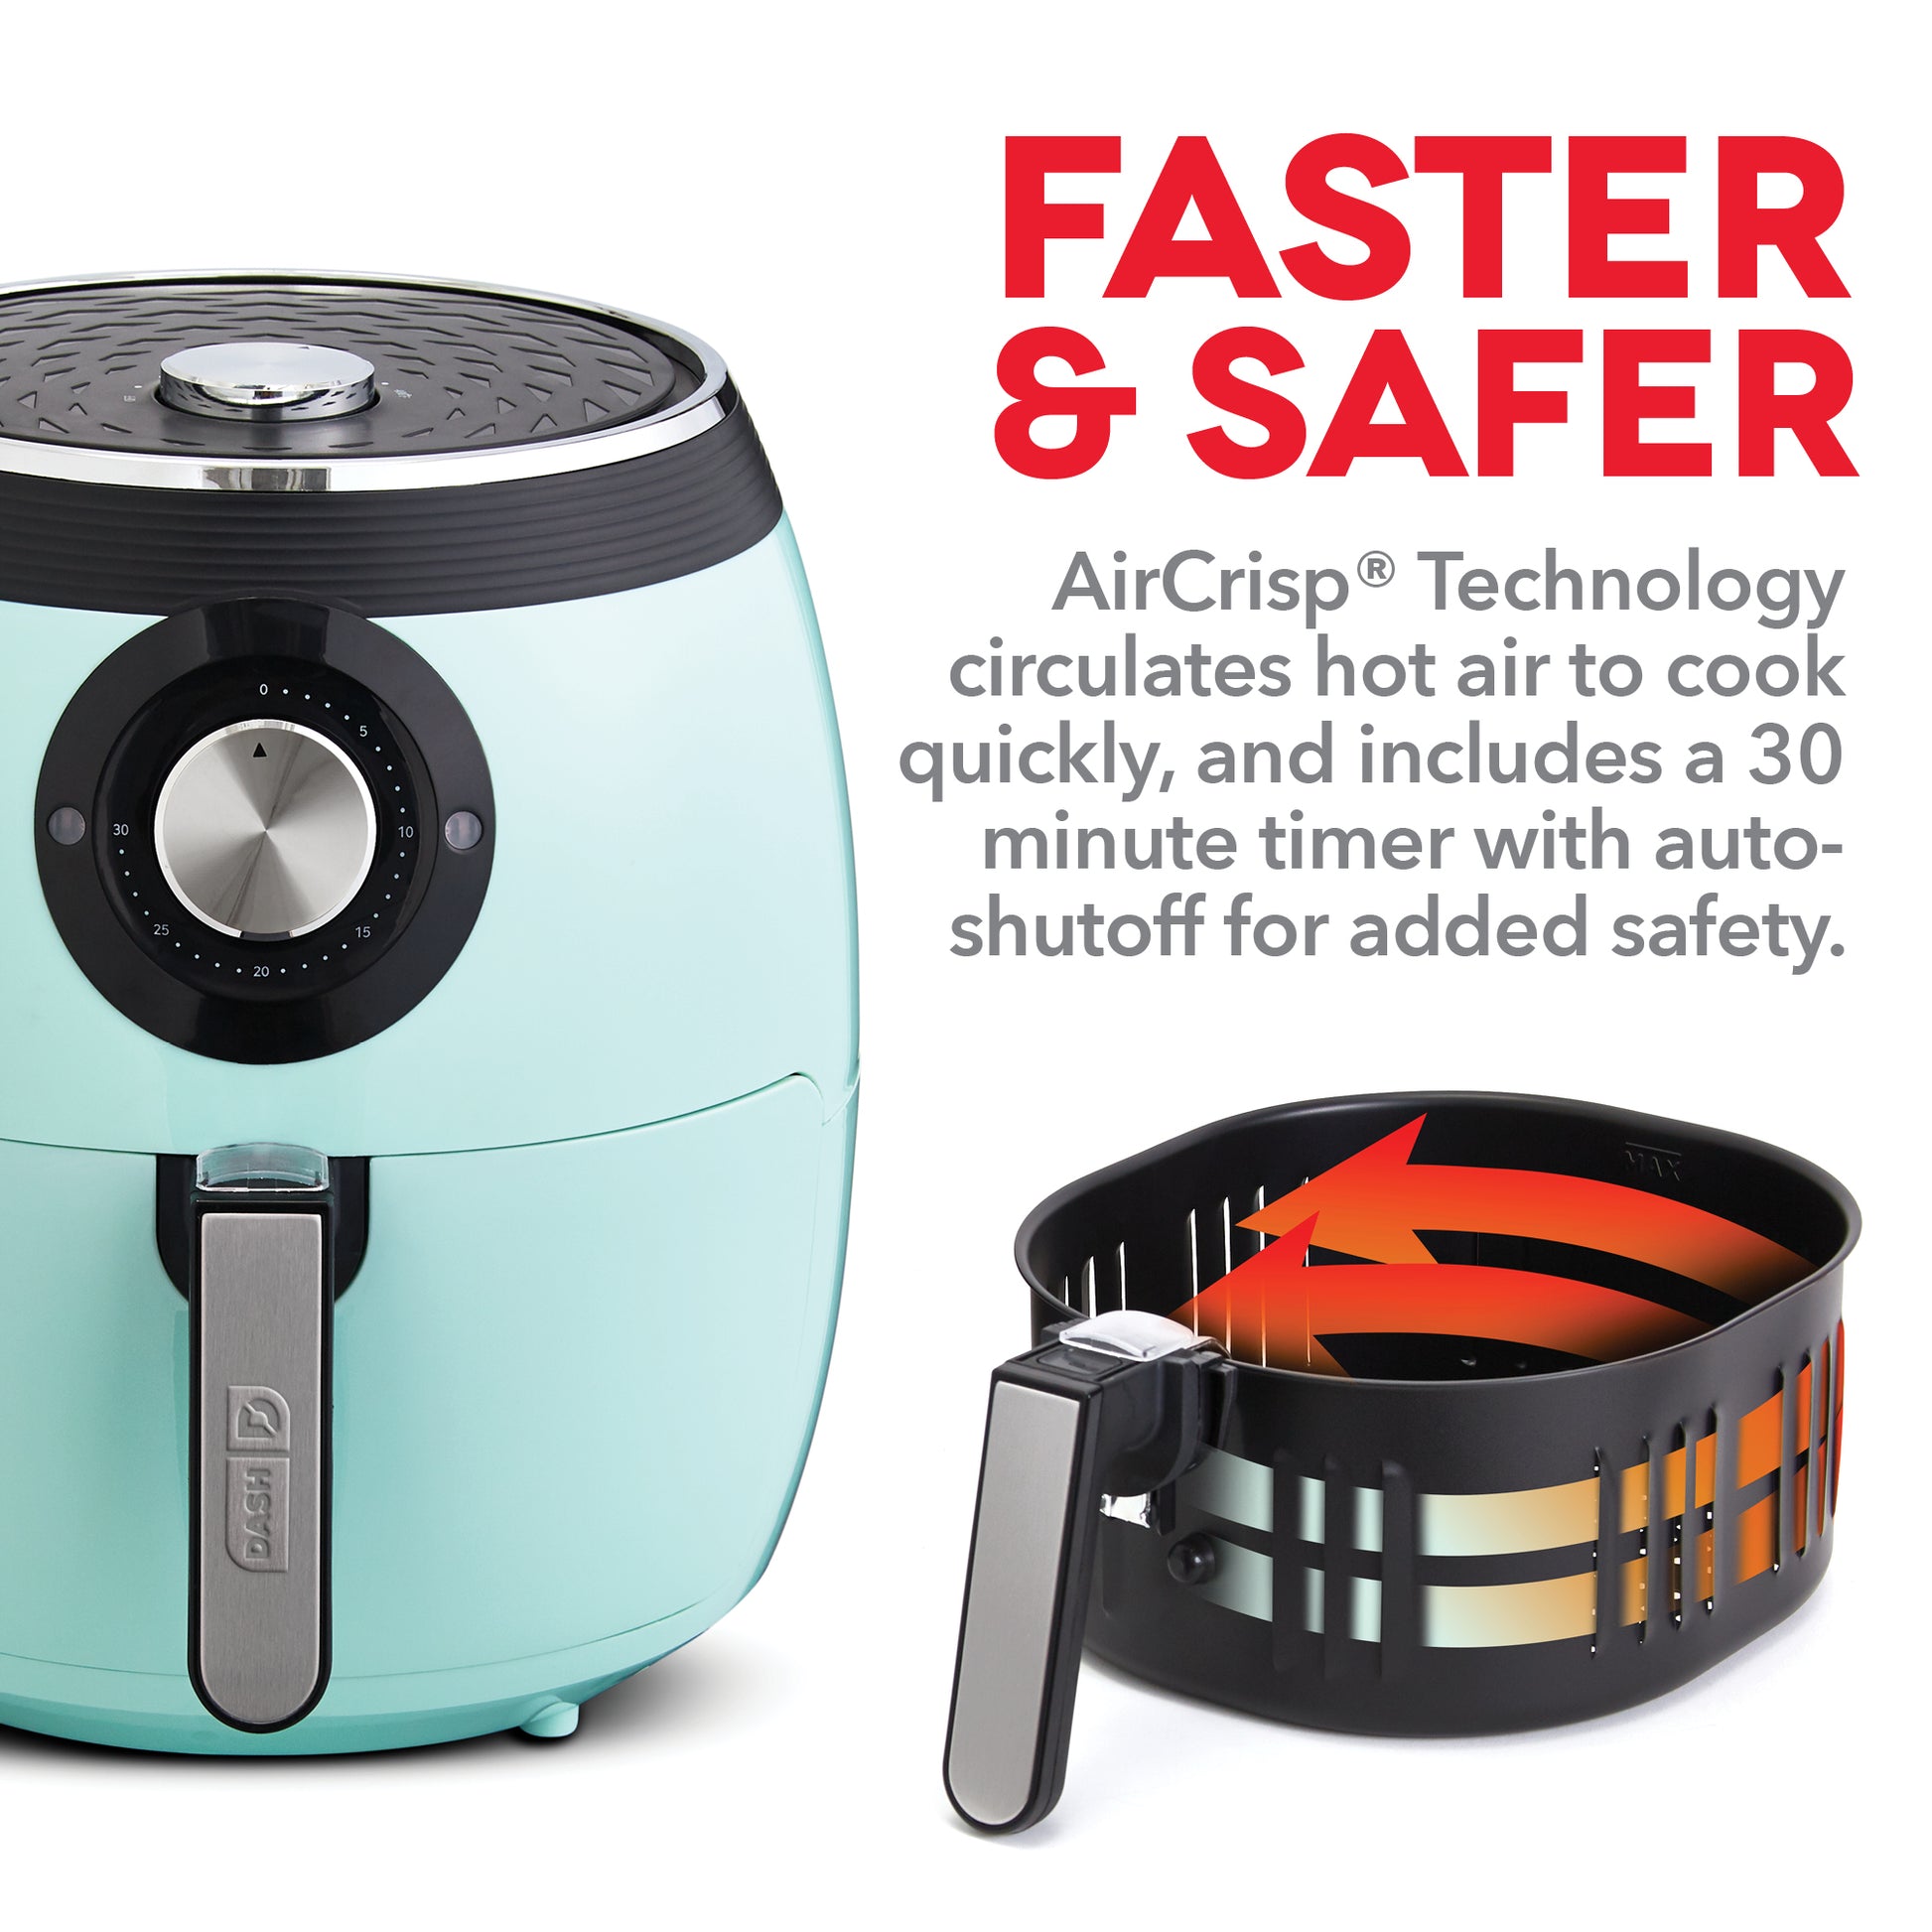  DASH Deluxe Electric Air Fryer + Oven Cooker with Temperature  Control, Non-stick Fry Basket, Recipe Guide + Auto Shut Off Feature,  1700-Watt, 6 Quart - Aqua : Home & Kitchen